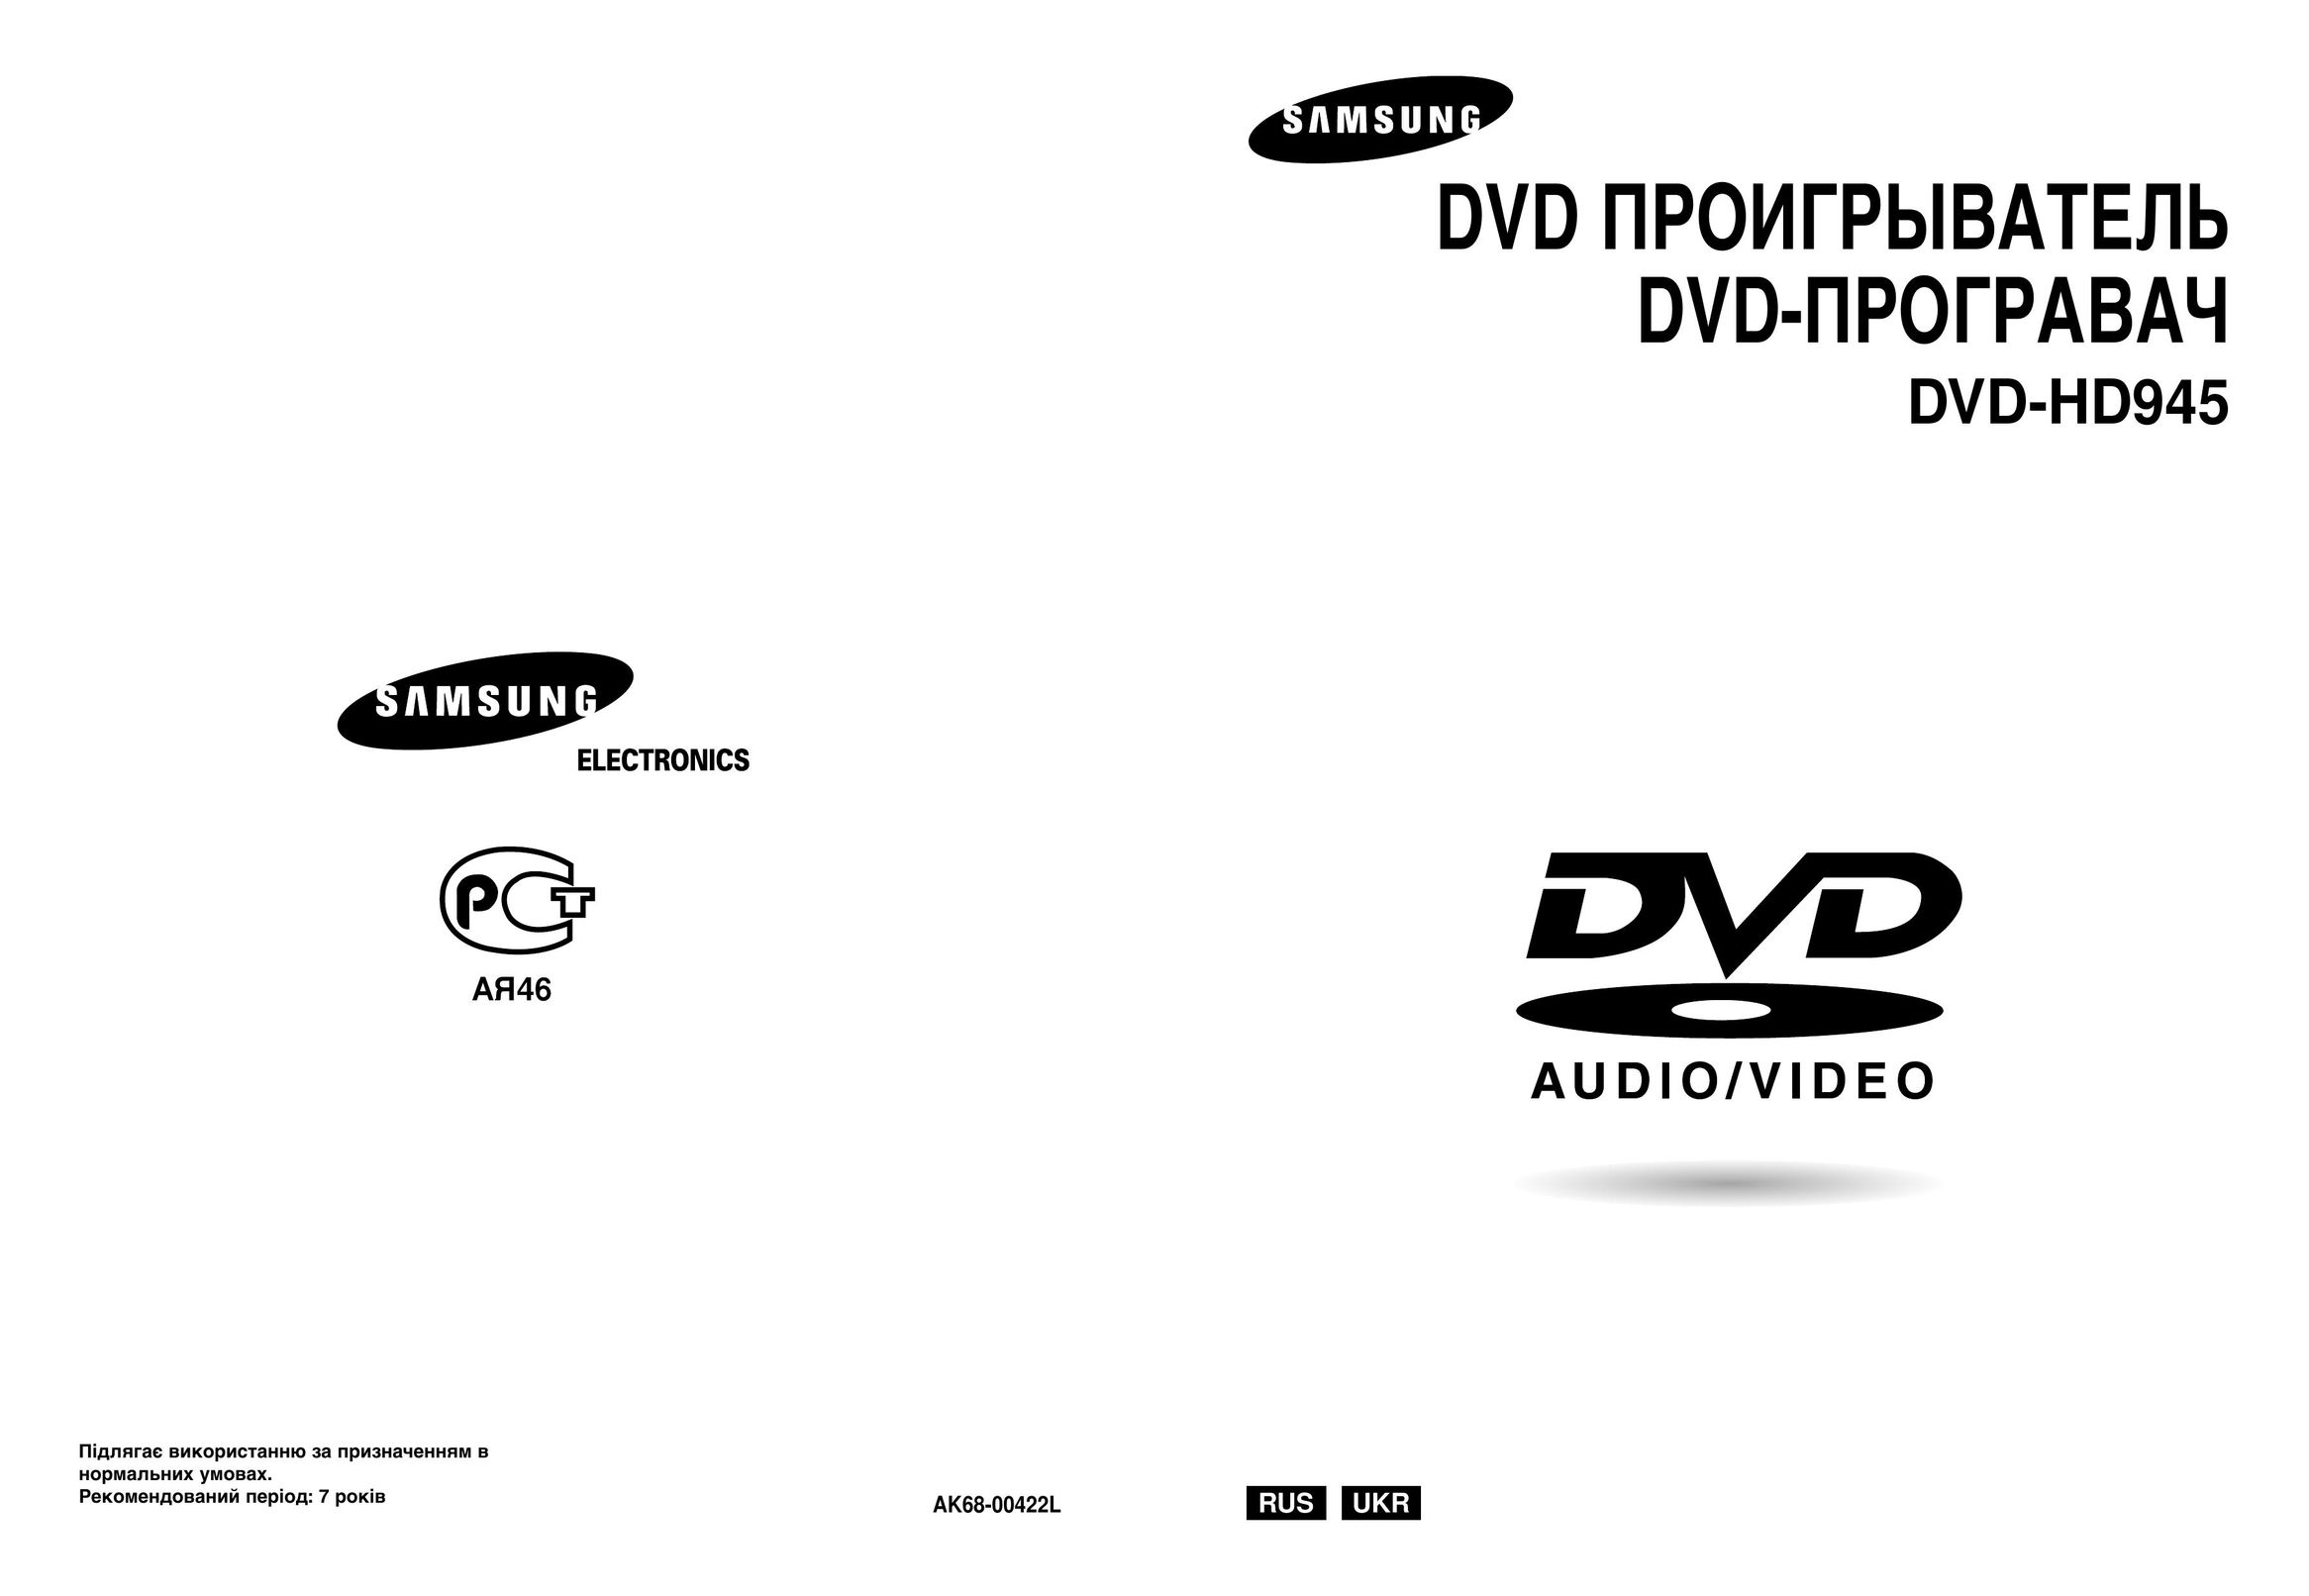 Samsung AK68-00422L DVD Player User Manual